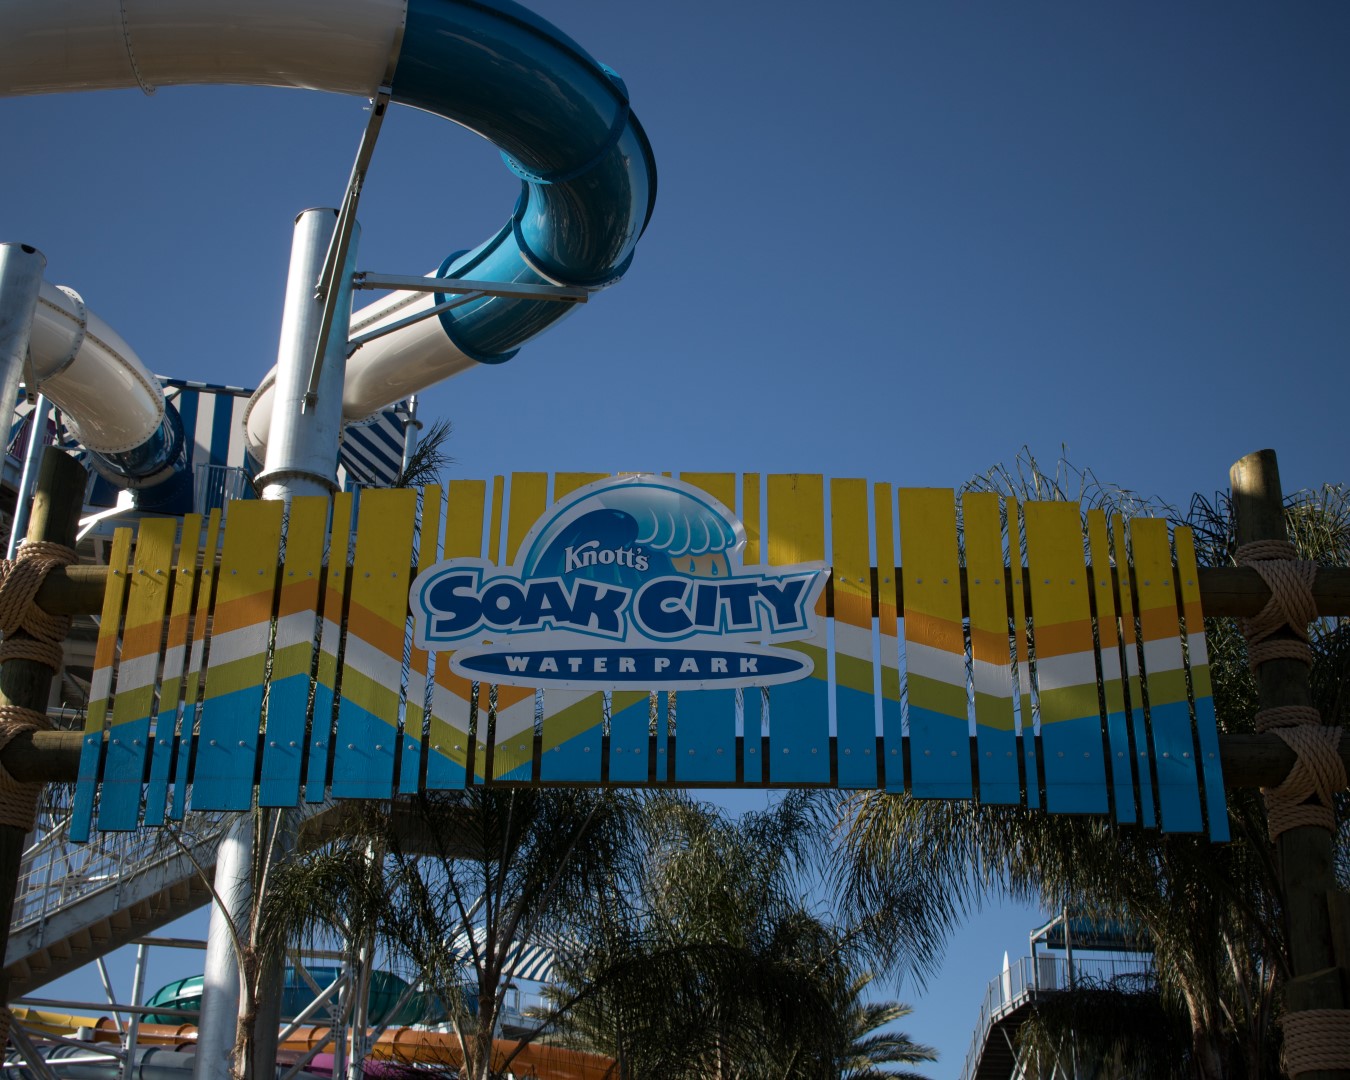 Knott's Soak City 7 New Slides in a Revitalized Water Park Coaster